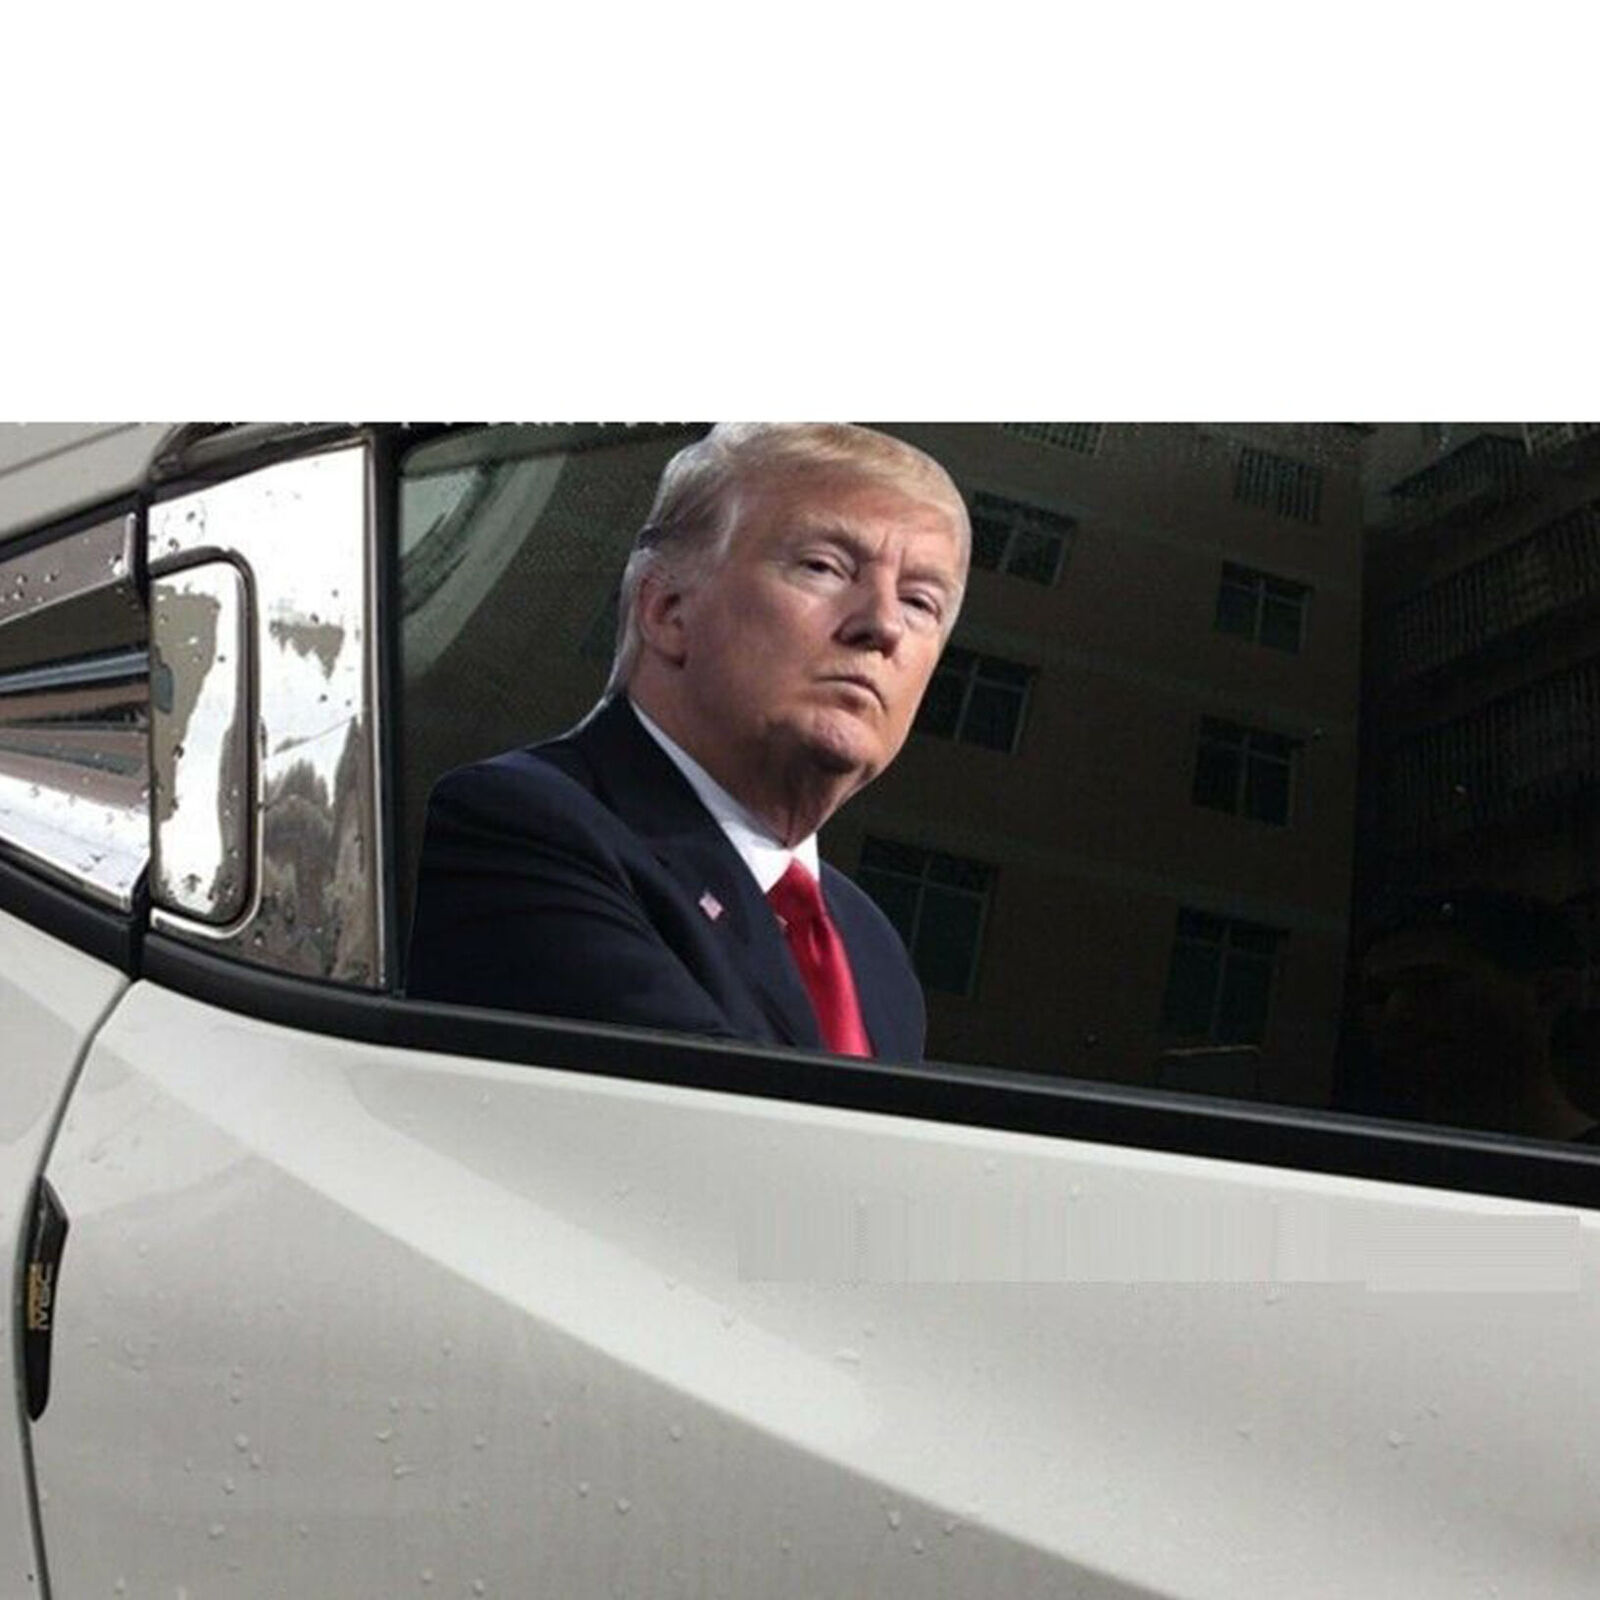 2020 President Donald Trump Car Sticker Real Life Person Size Passenger Window